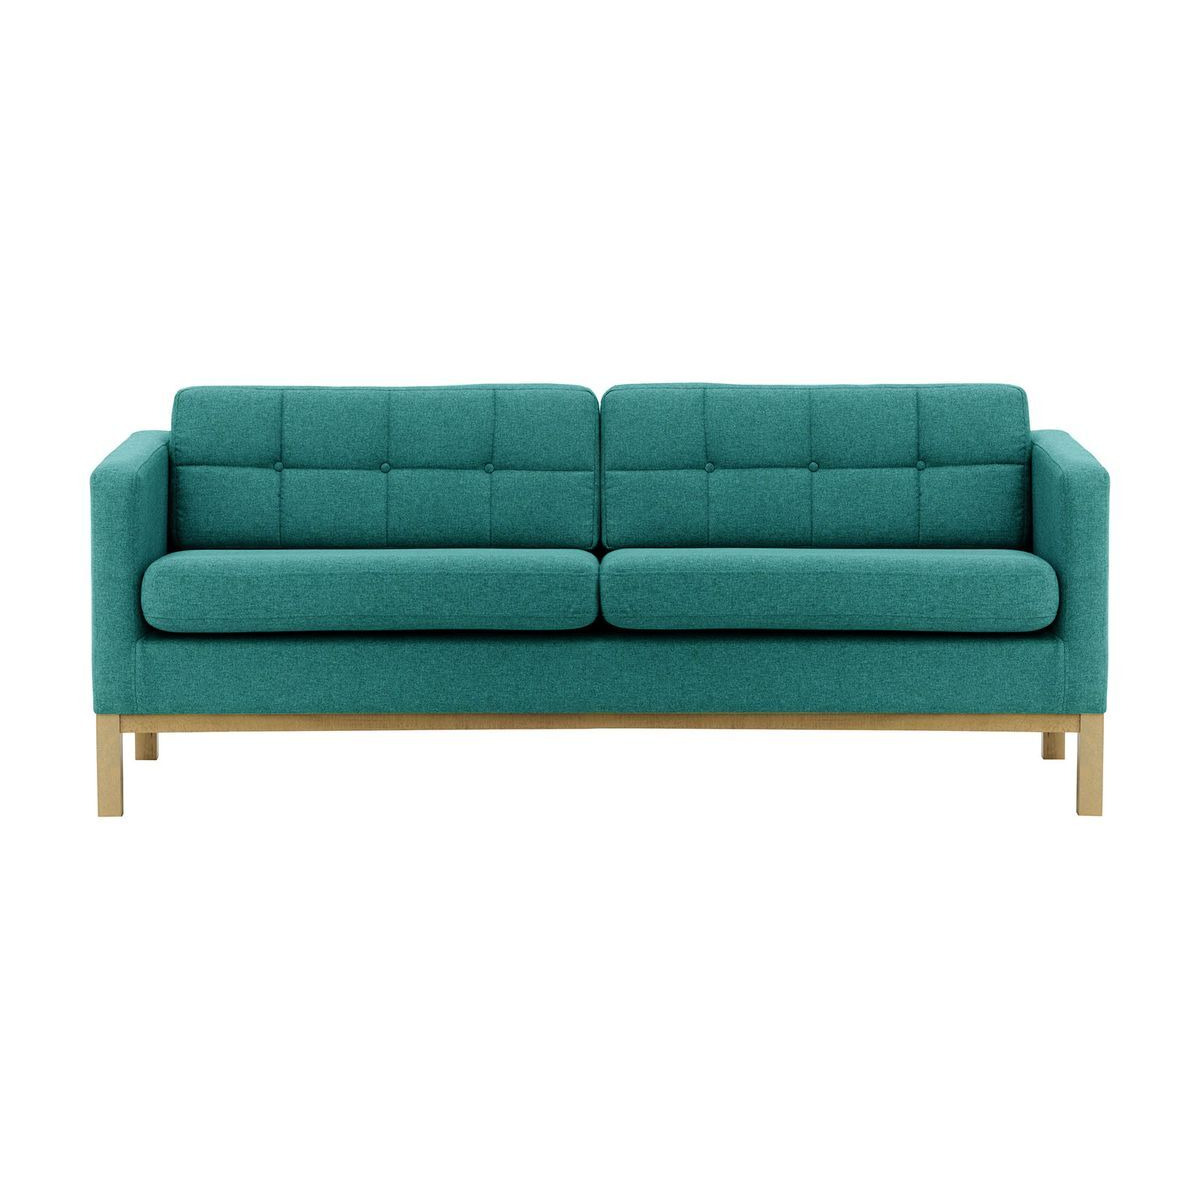 Normann 3 Seater Sofa, turquoise, Leg colour: wax black - image 1